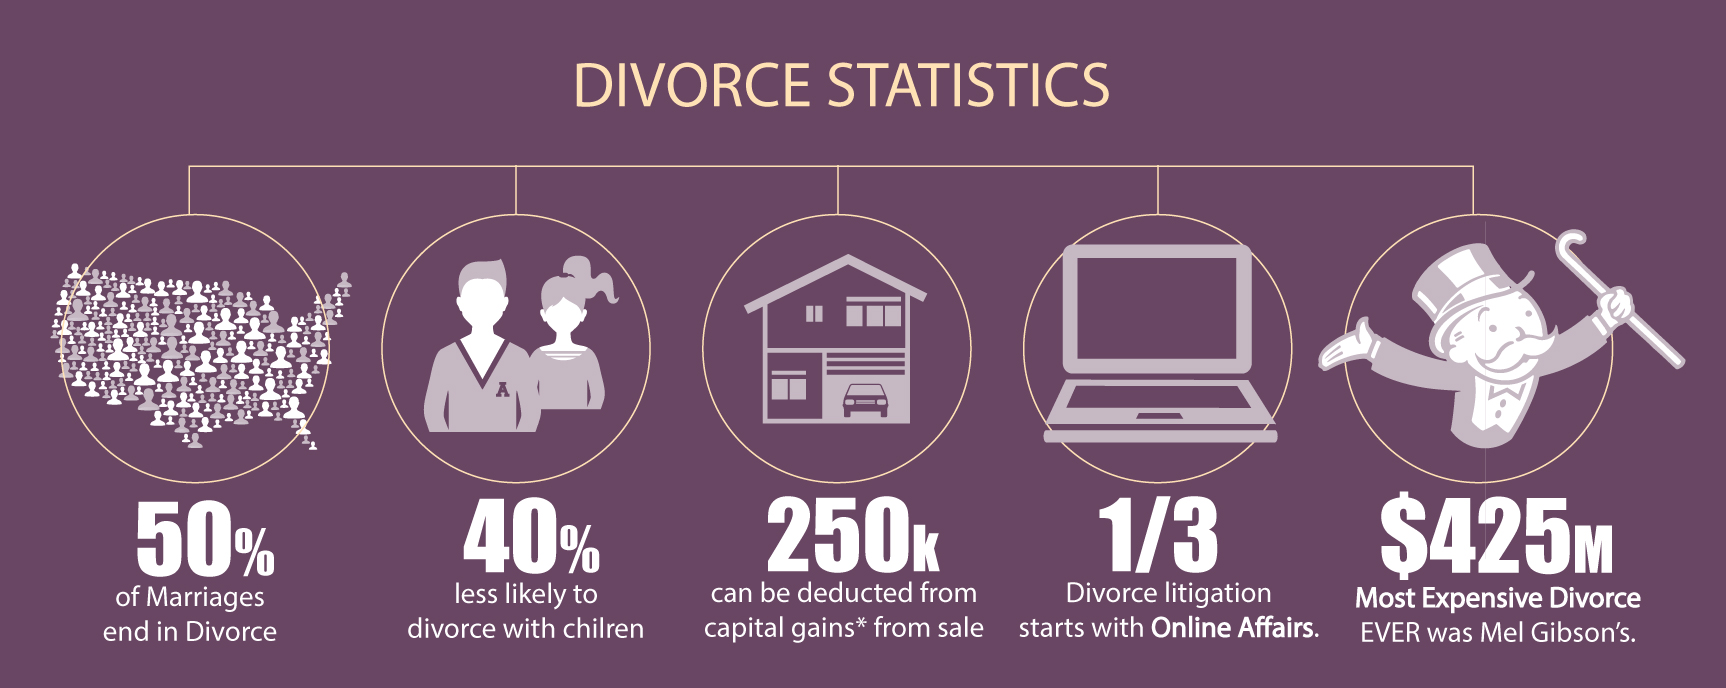 divorce-talktopaul-paul-argueta-divorce-real-estate-agent-stats